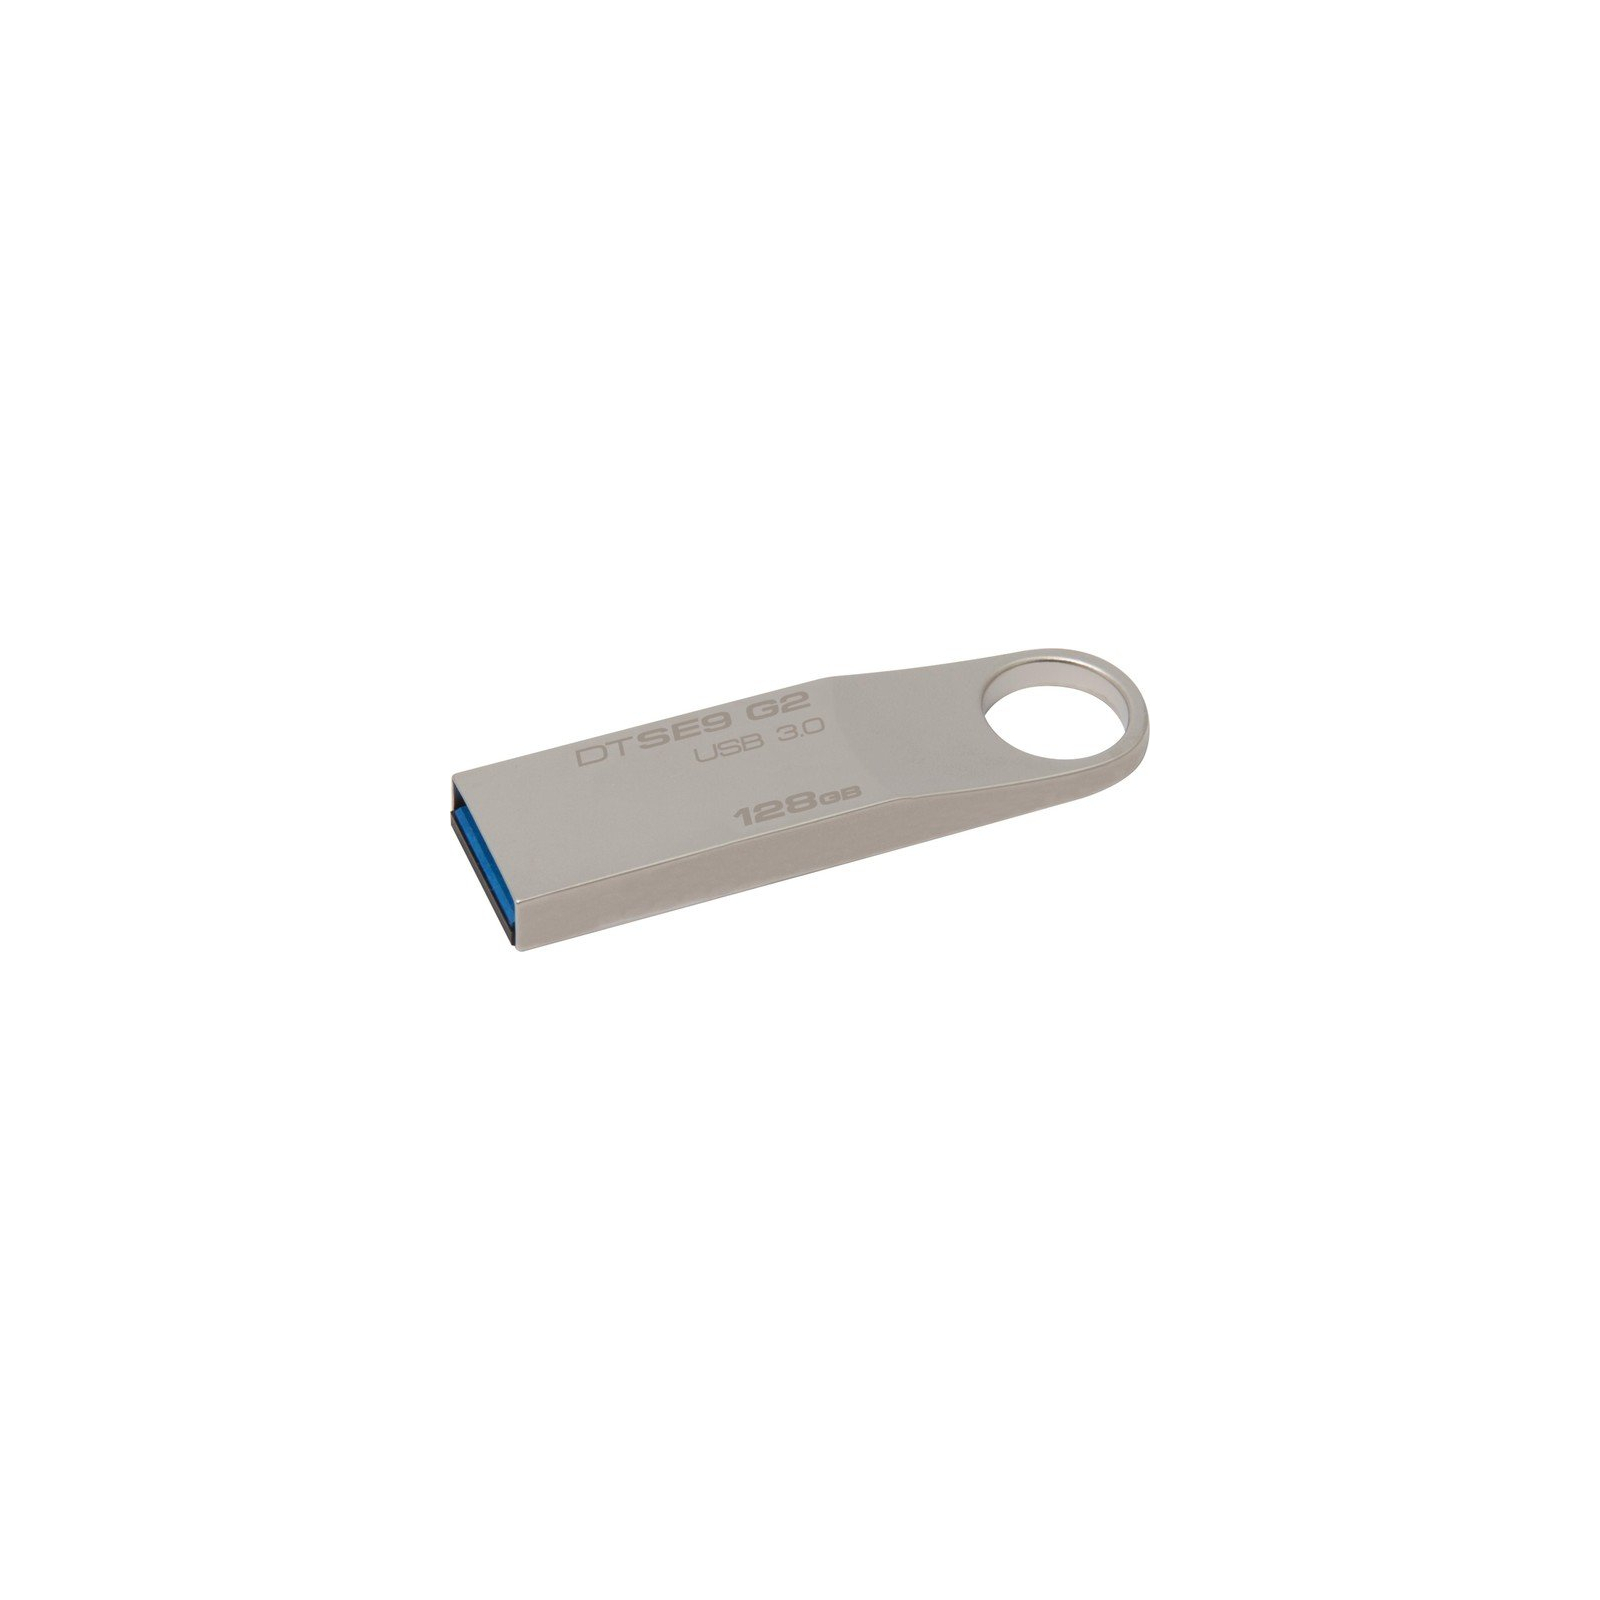 USB флеш накопитель Kingston 128Gb DataTraveler SE9 G2 USB 3.0 (DTSE9G2/128GB) изображение 3